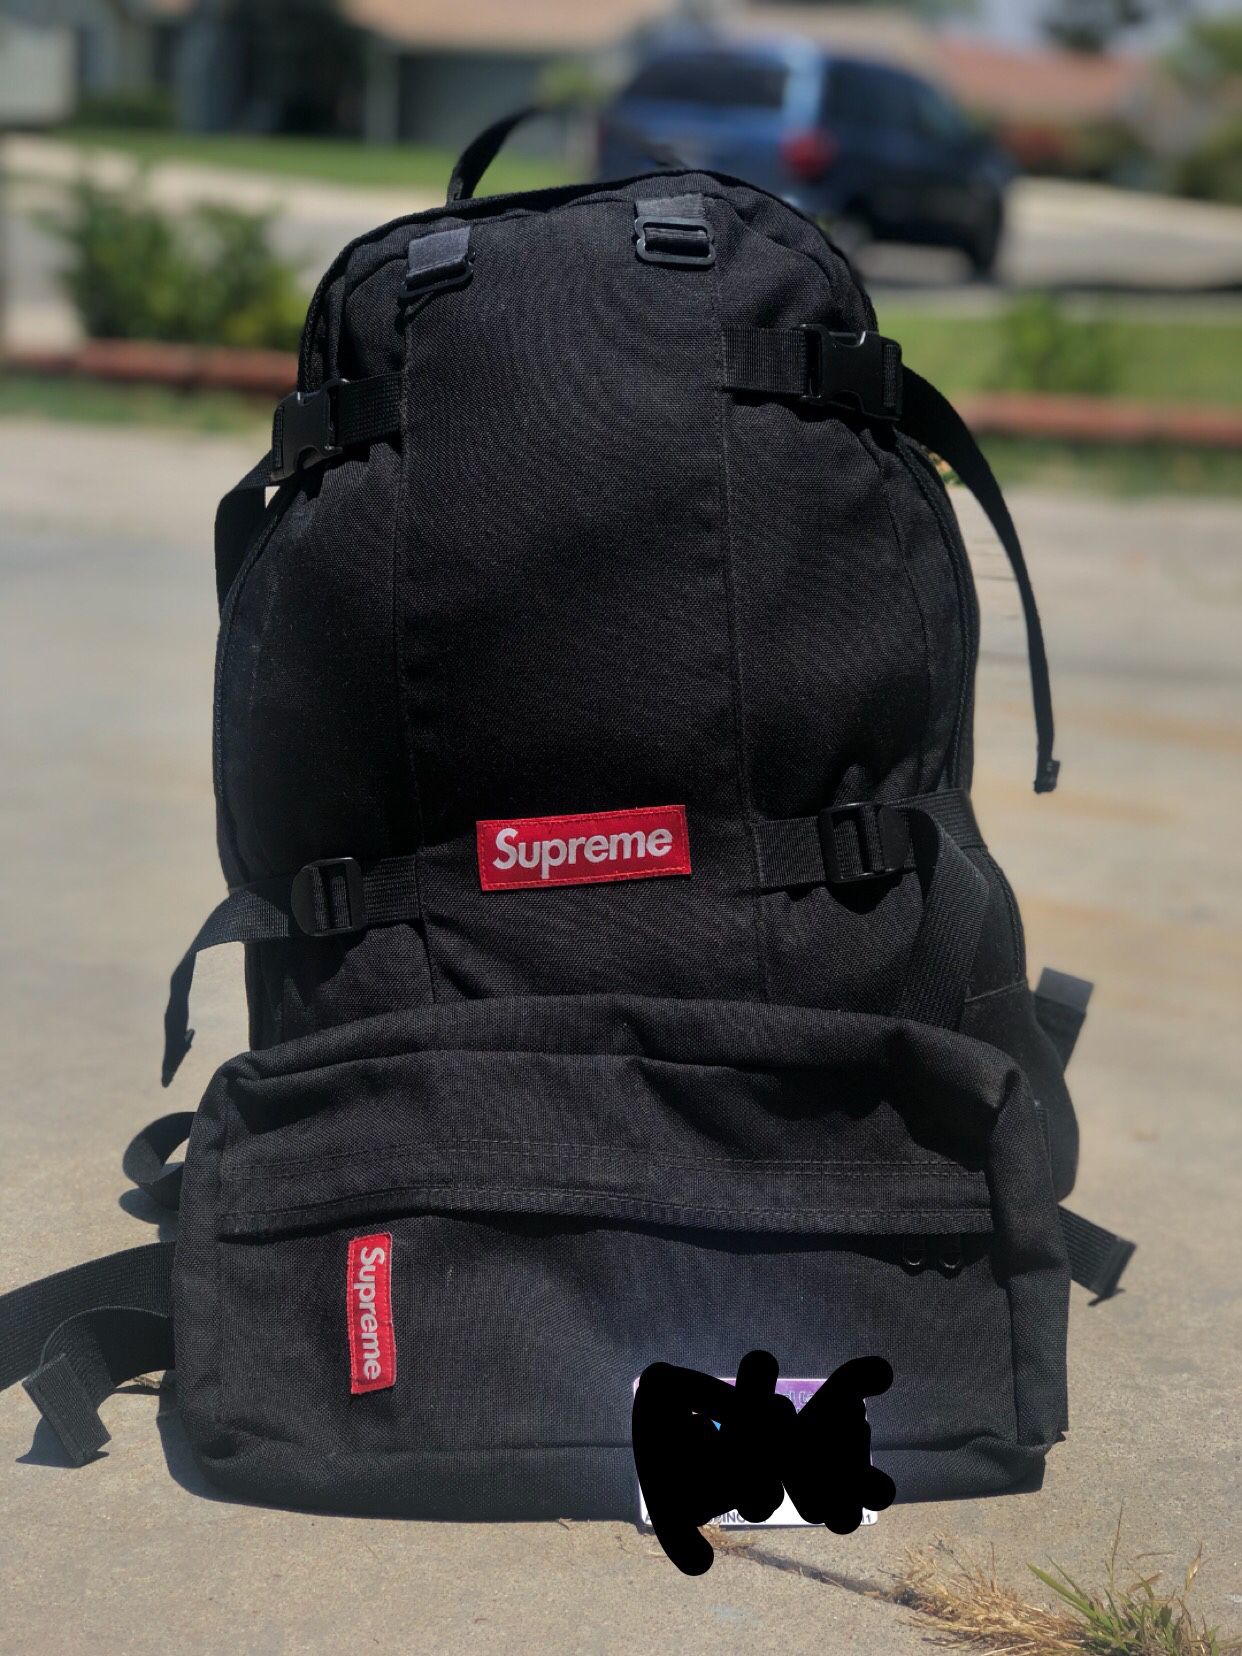 *RARE* Supreme SS12 Backpack w/ Matching Waistbag